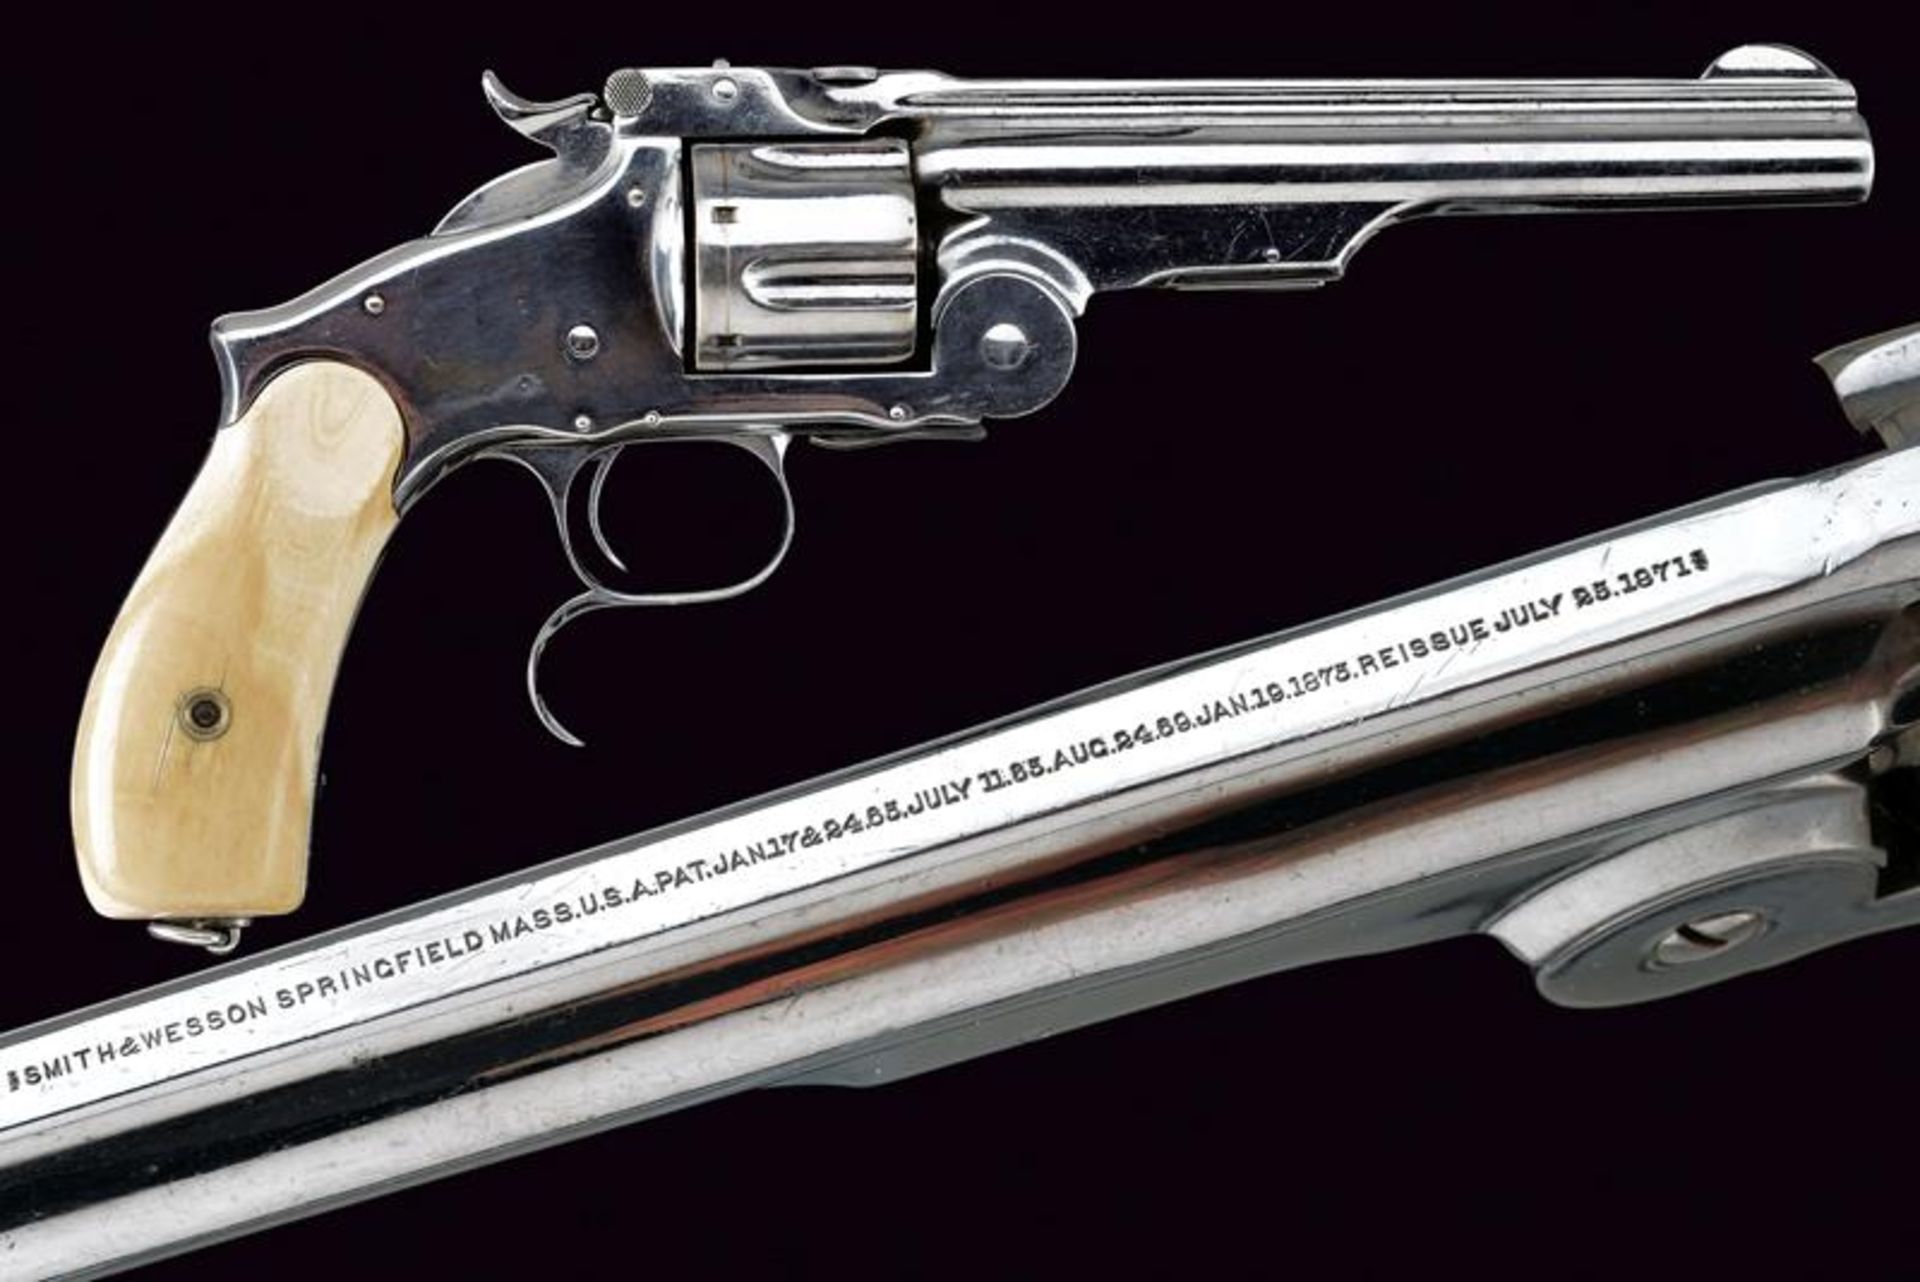 A rare S&W Third Model Russian revolver